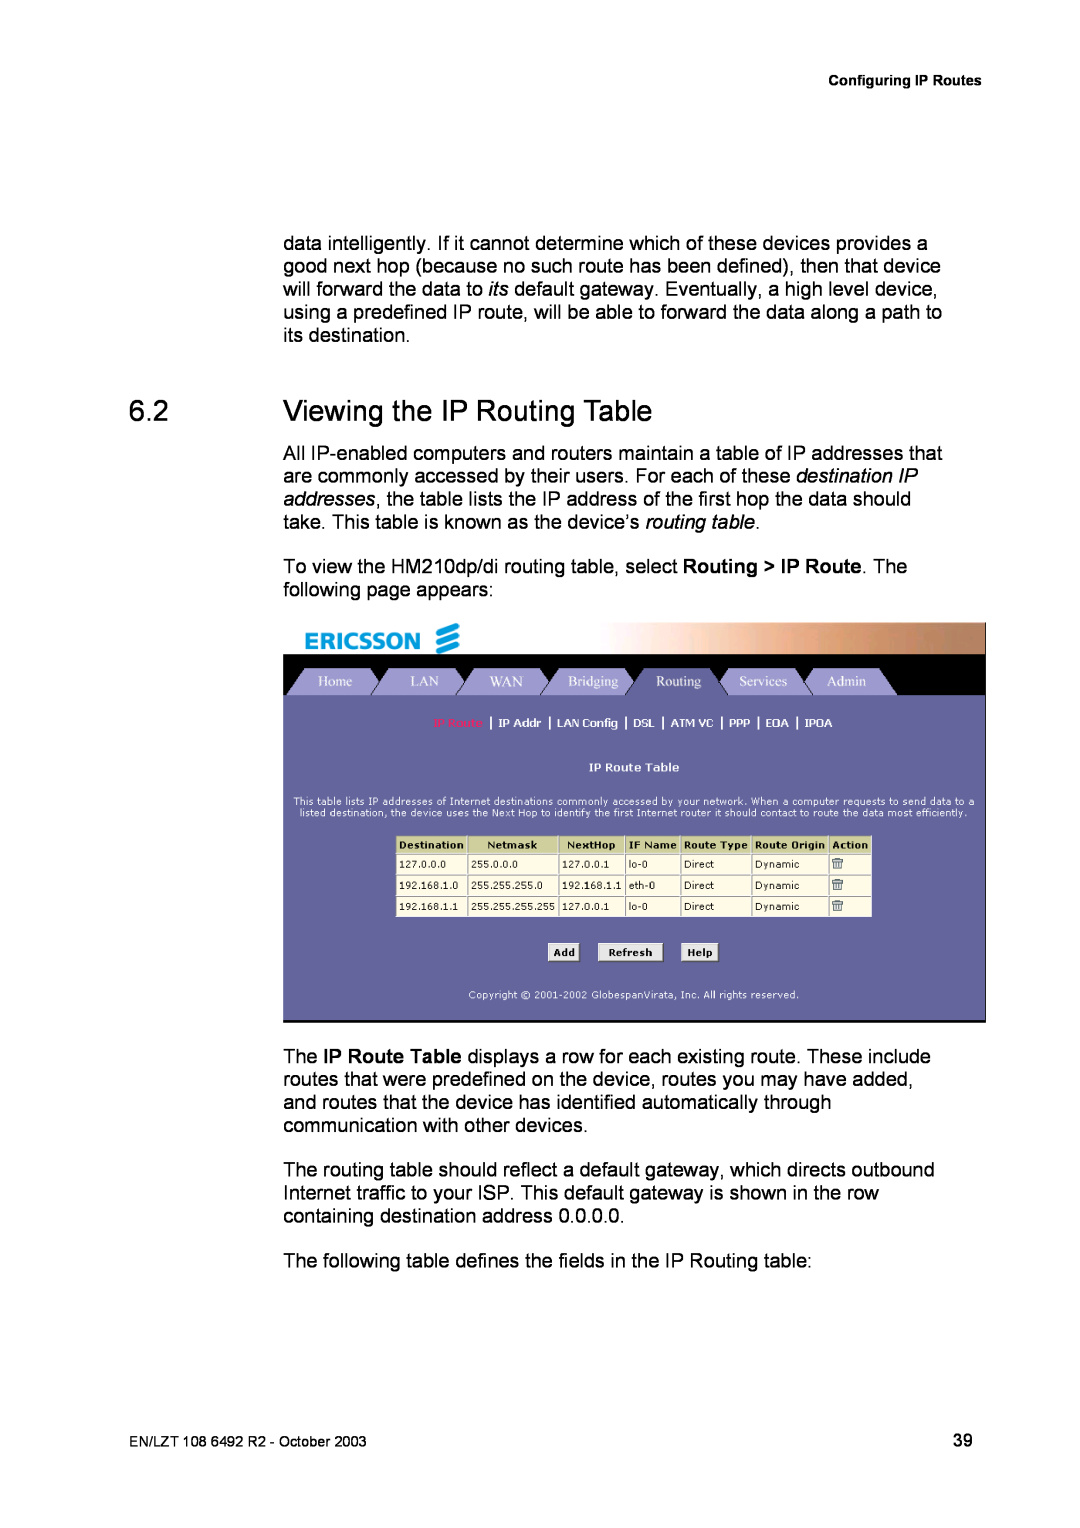 Garmin HM210DP/DI manual Viewing the IP Routing Table 